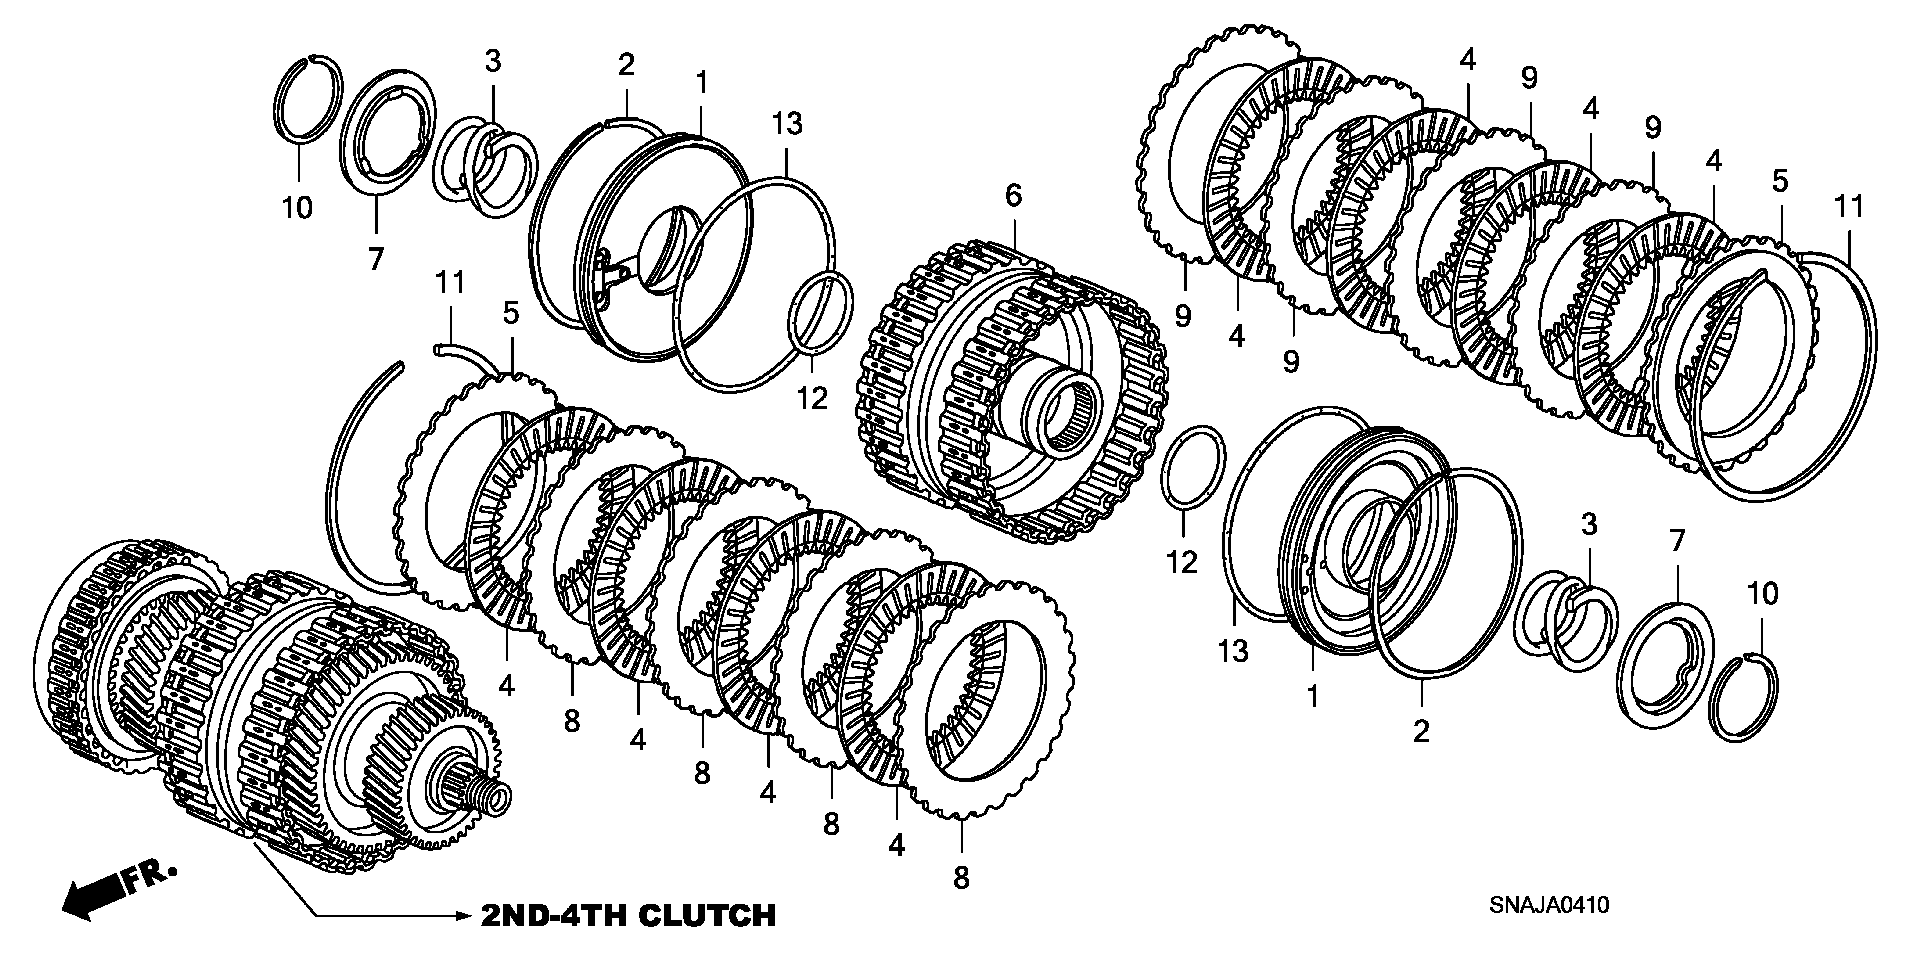 CLUTCH( SECOND FORCE)(1.8L)